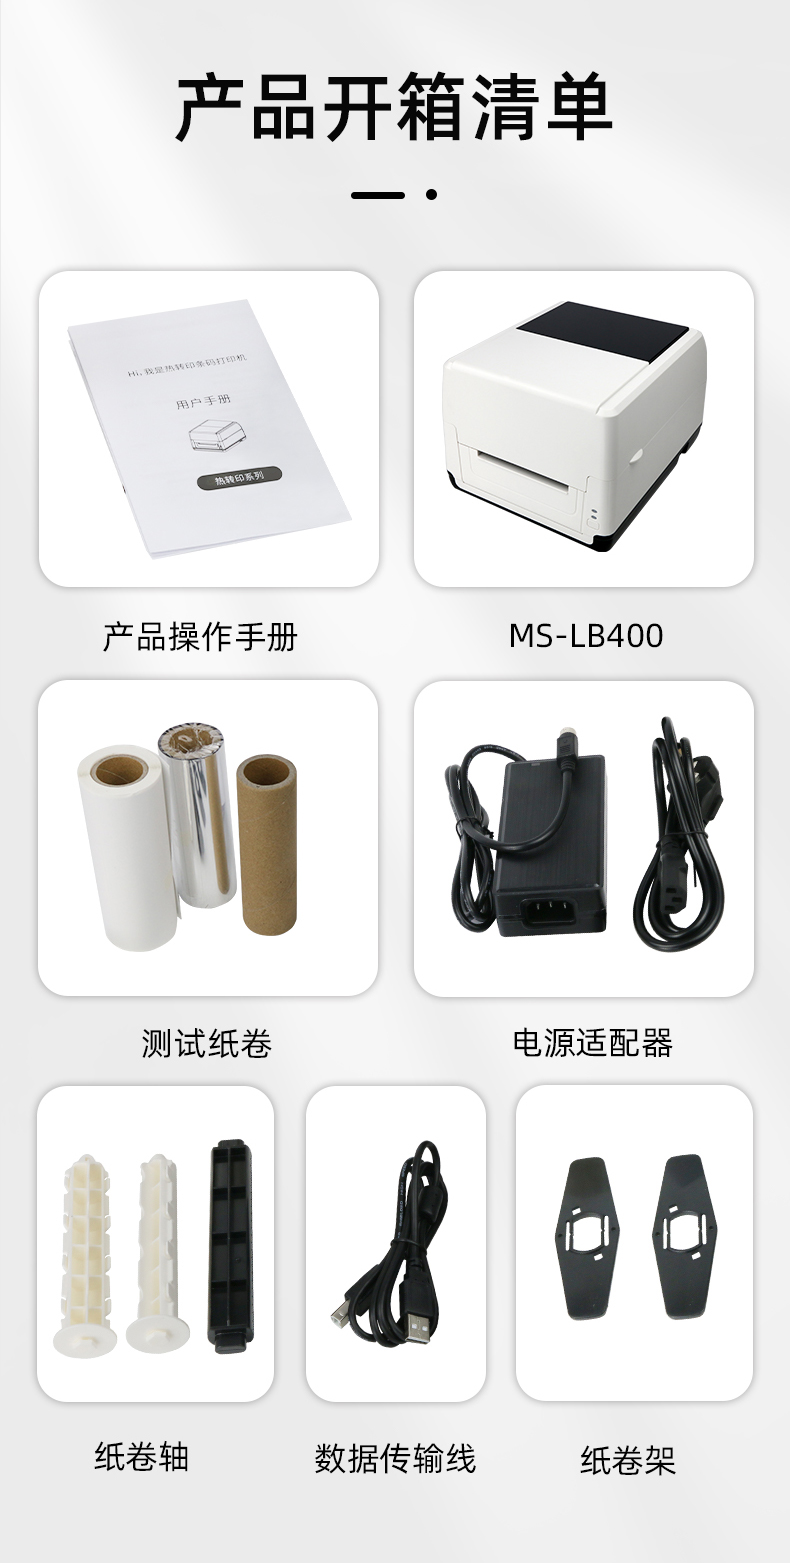 MS-LB400配有产品操作手册，测试纸卷和耗材，电源适配器，纸卷轴，数据传输线，纸卷架